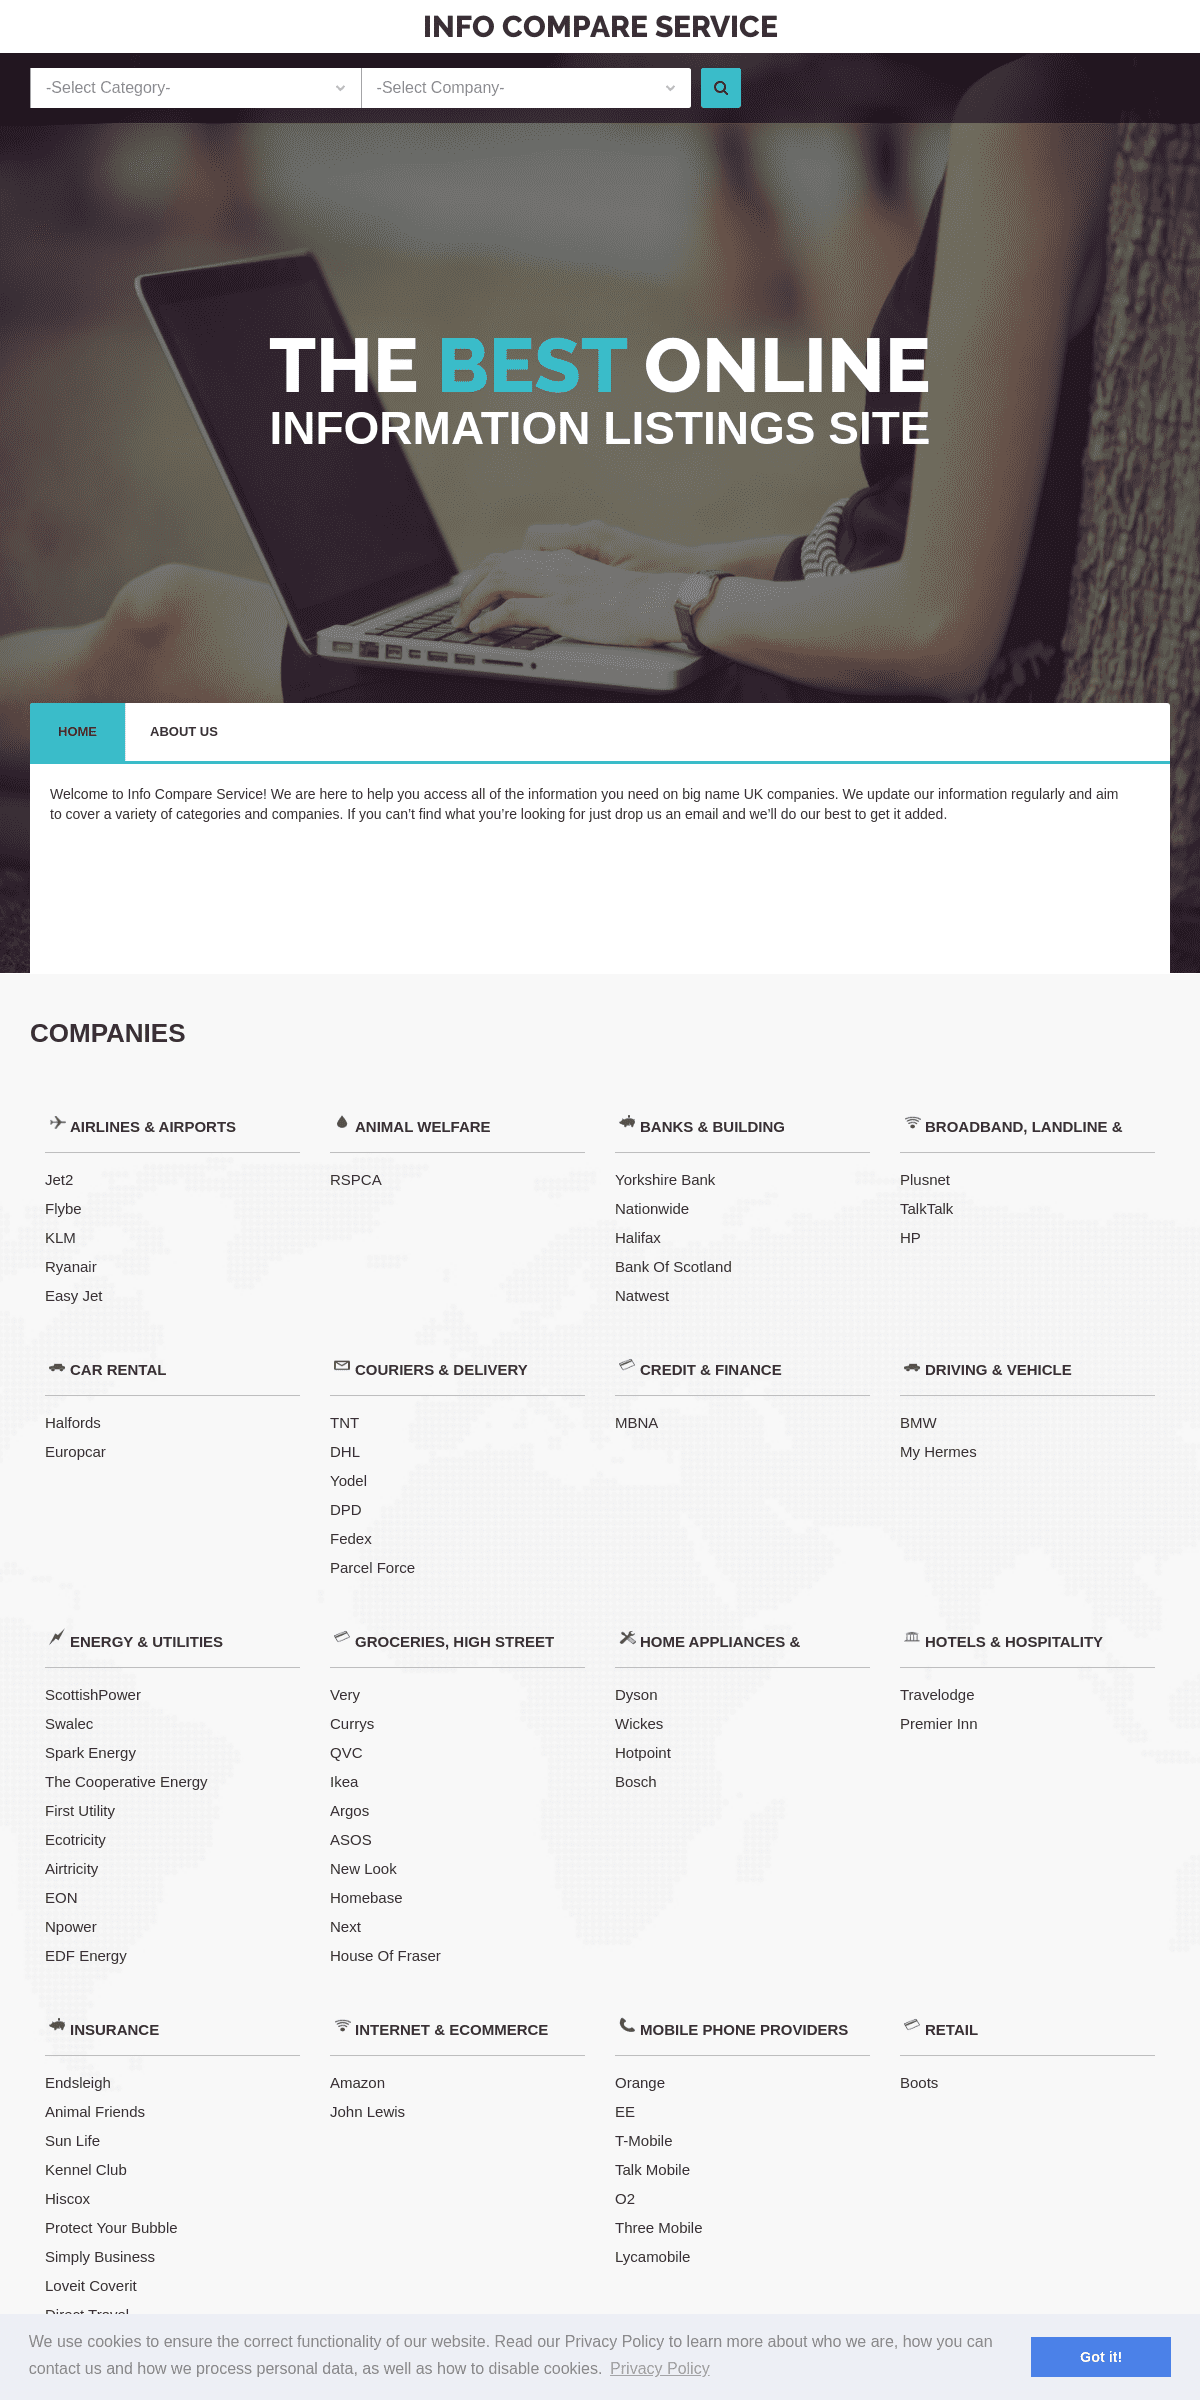 A complete backup of info-compare-service.com